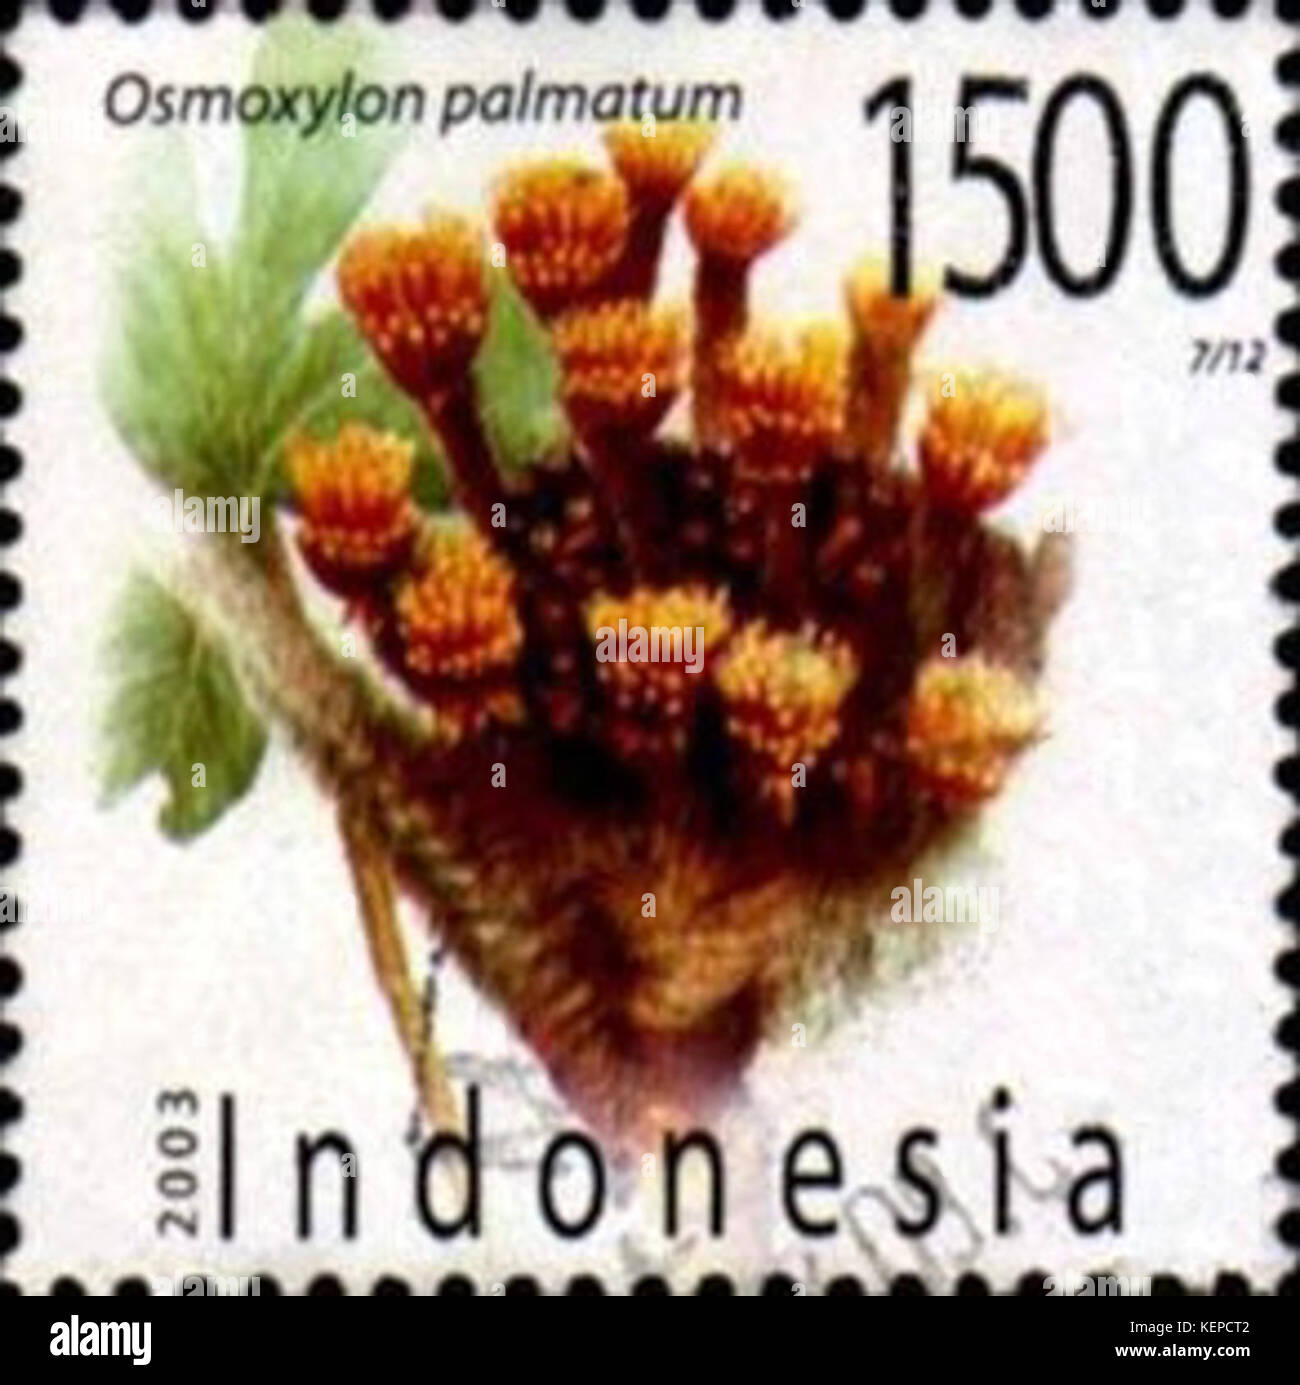 Osmoxylon palmatum 2003 Indonesia stamp Stock Photo